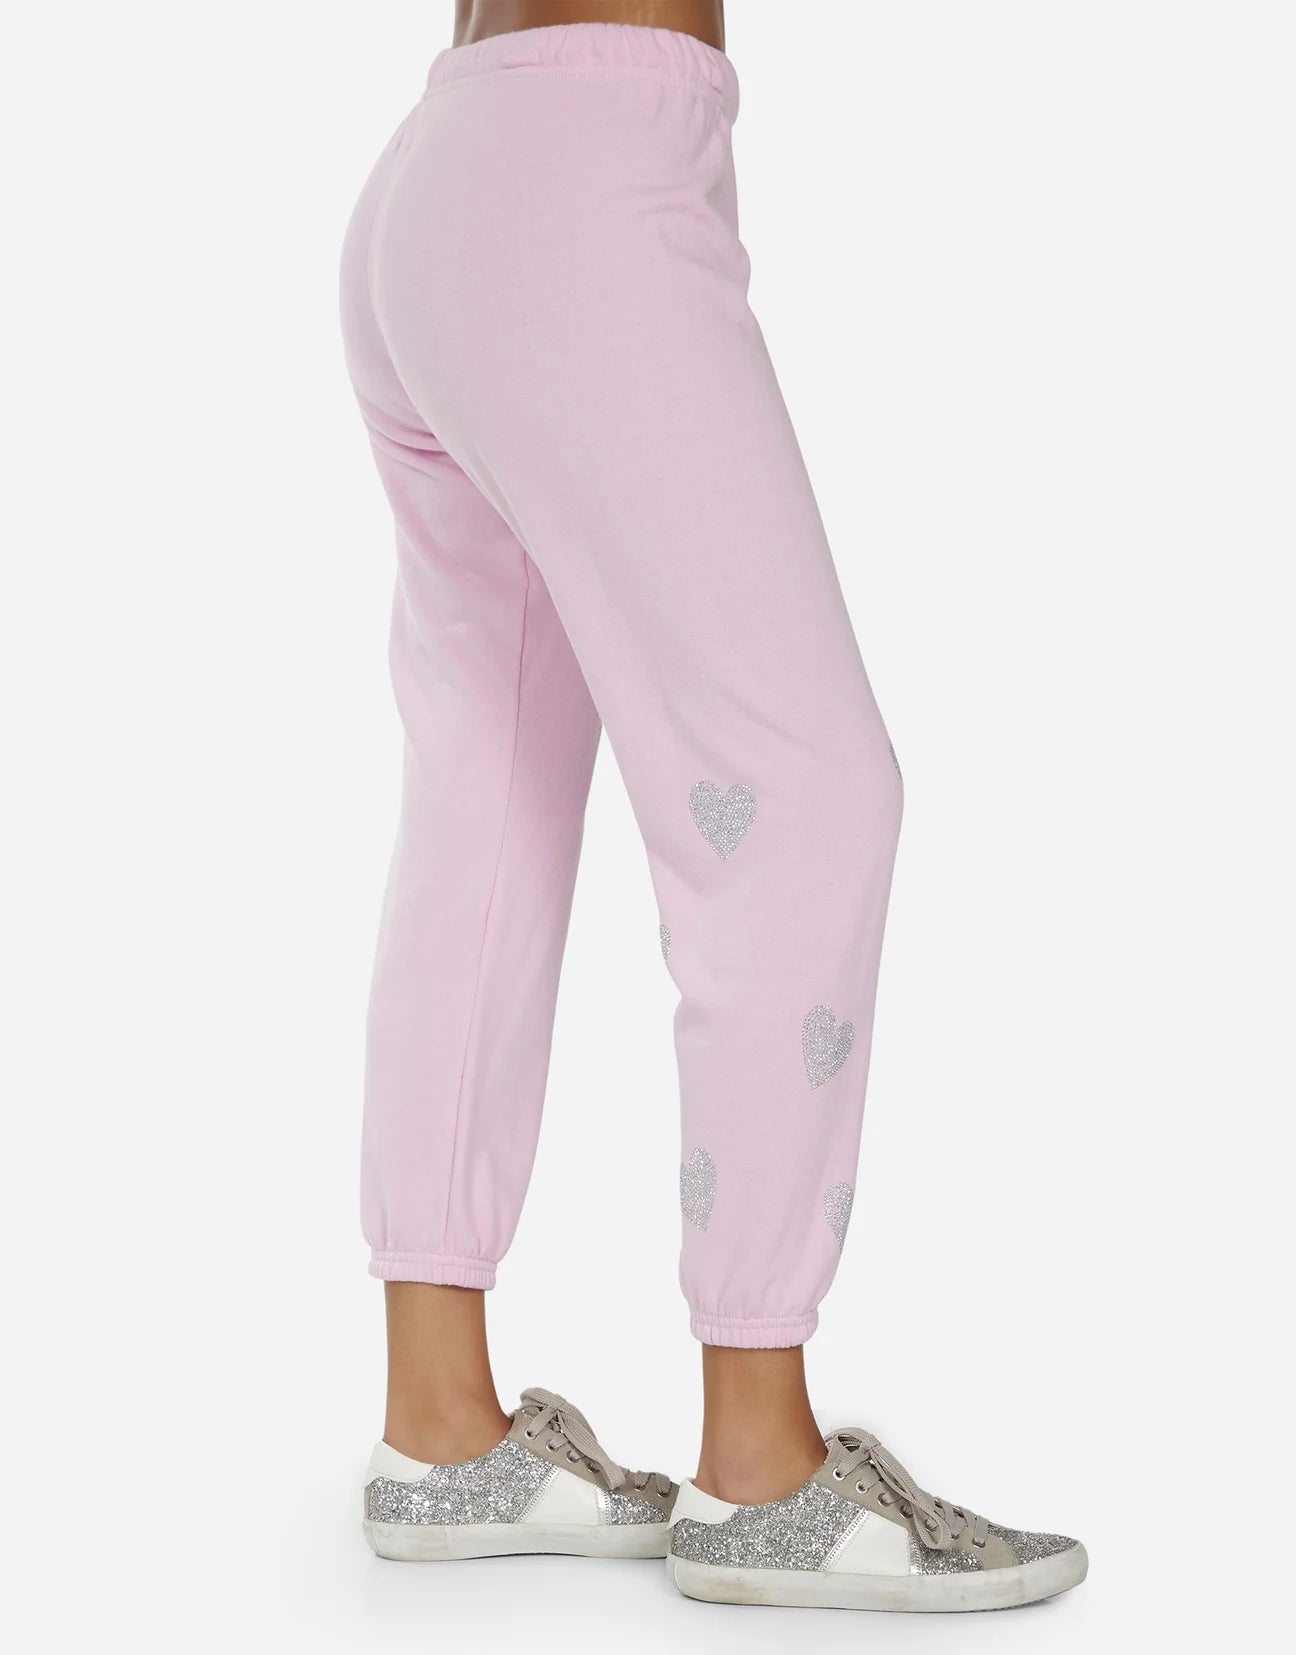 Shop Lauren Moshi Alana Crystal Pink Peace Love Skull Sweatpants - Premium Joggers from Lauren Moshi Online now at Spoiled Brat 